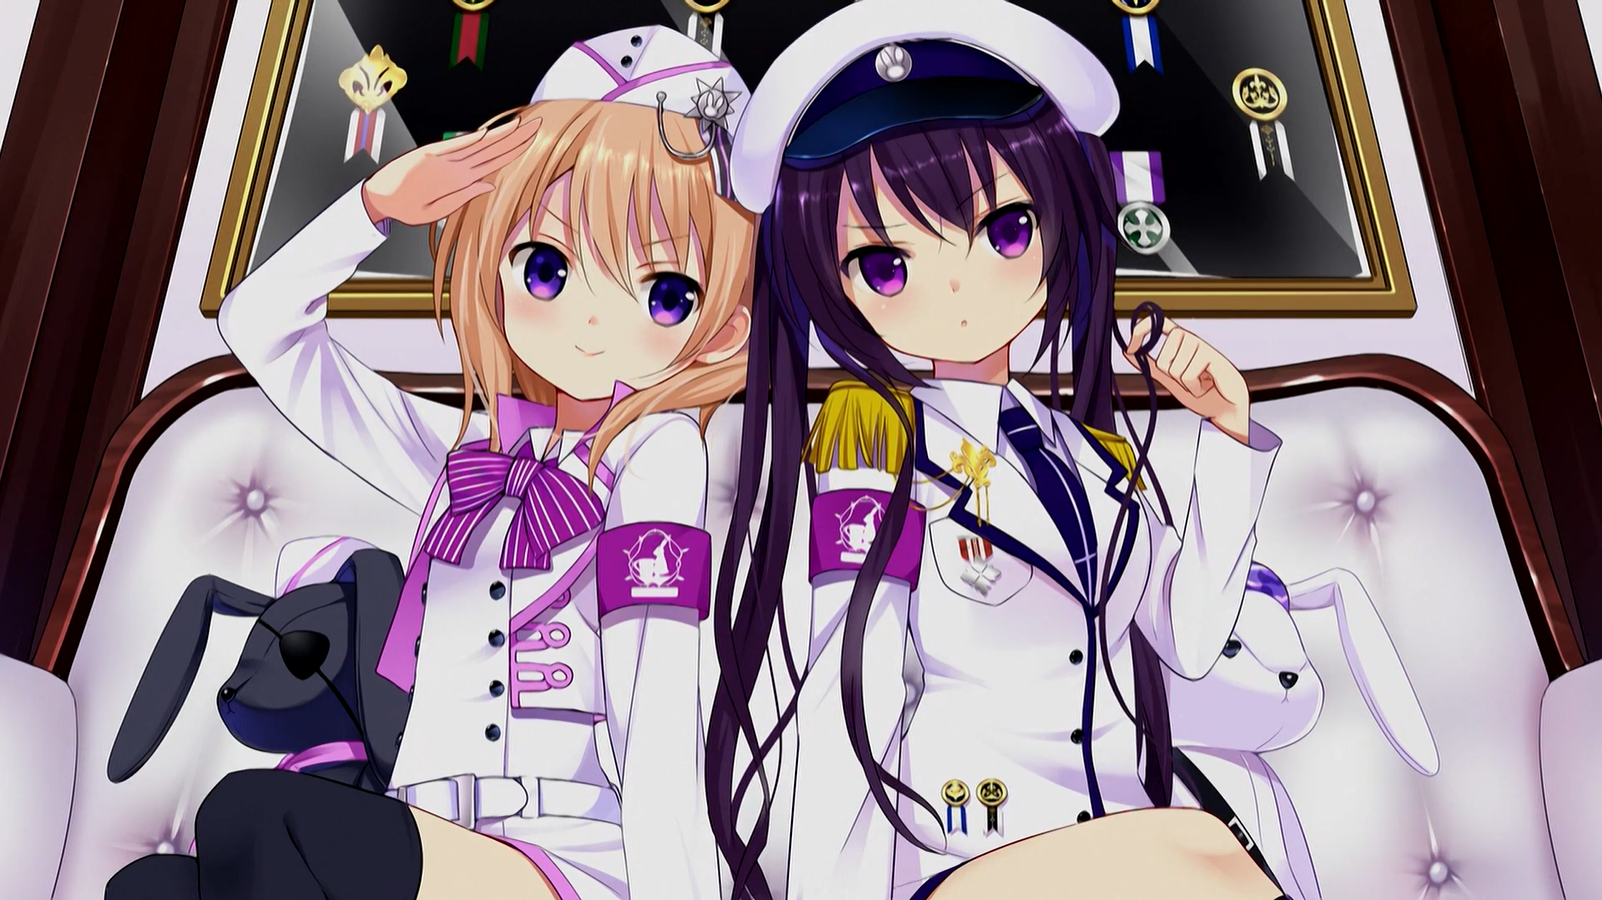 Anime 1602x900 anime anime girls Gochuumon wa Usagi Desu ka? sailor uniform hat bow tie uniform smiling looking at viewer blushing long hair sitting salute Medals twintails plush toy